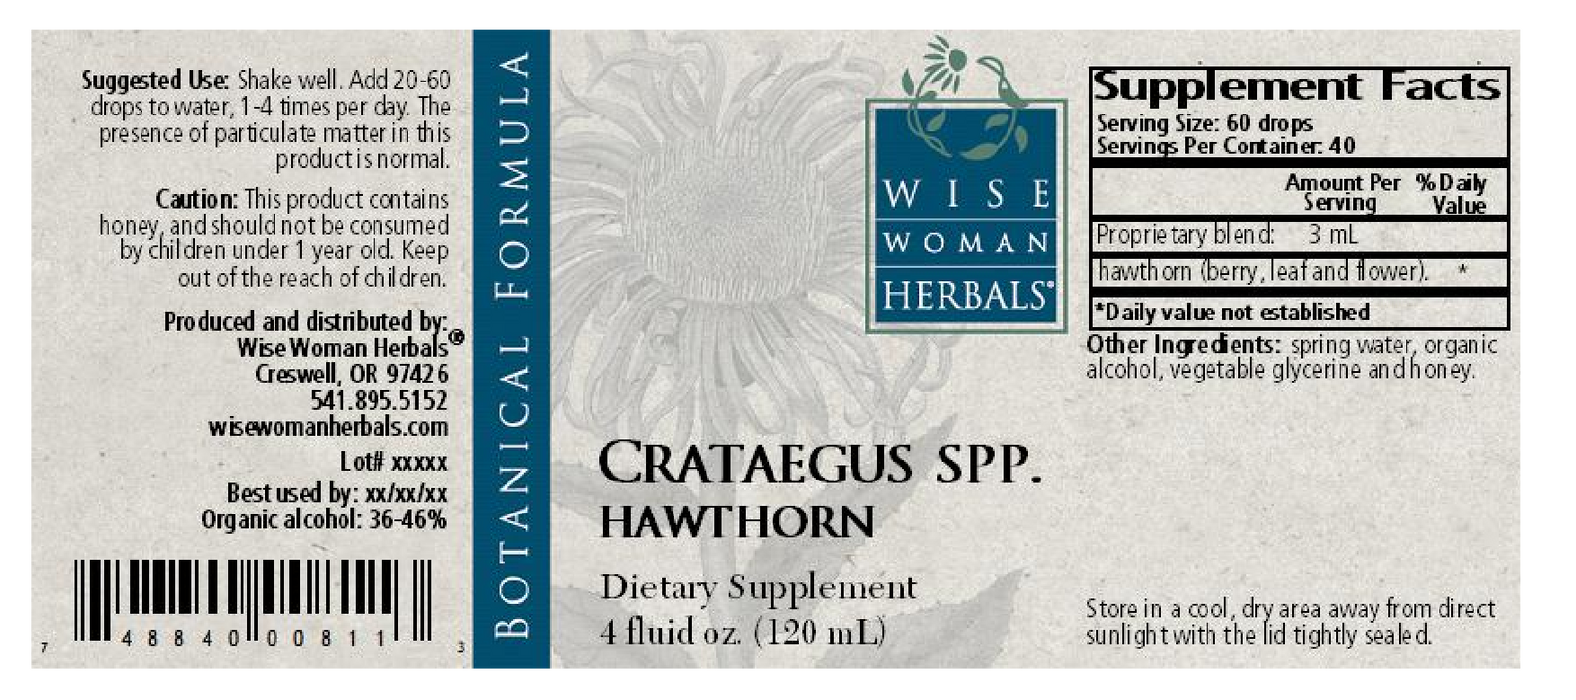 Wise Woman Herbals Crataegus/hawthorne